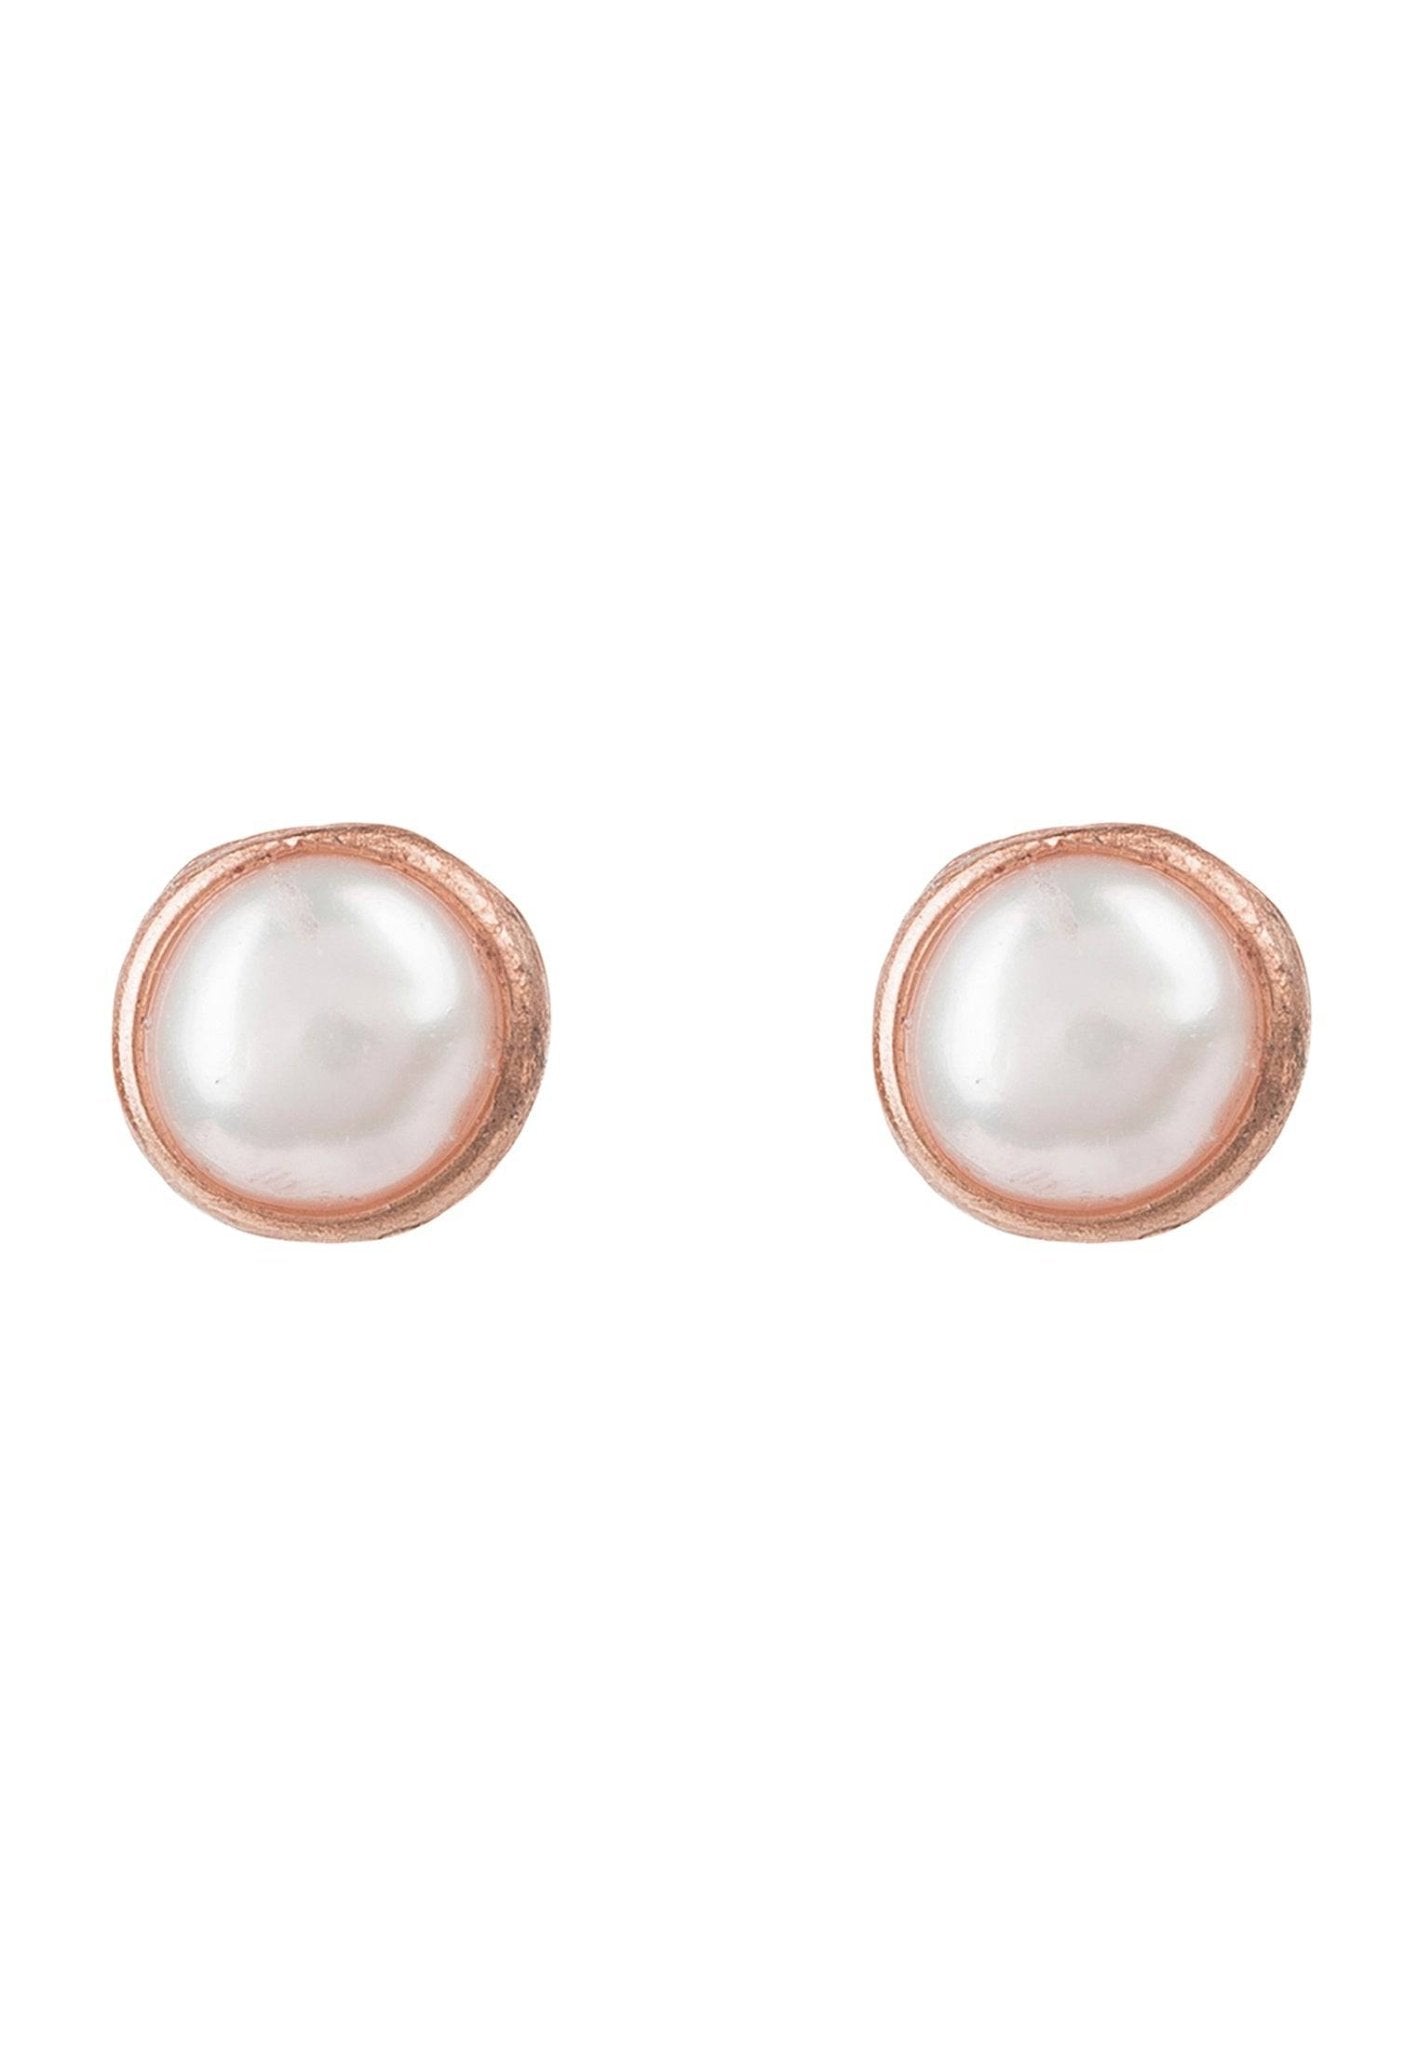 Petite Gemstone Earrings Rosegold White Pearl - LATELITA Earrings